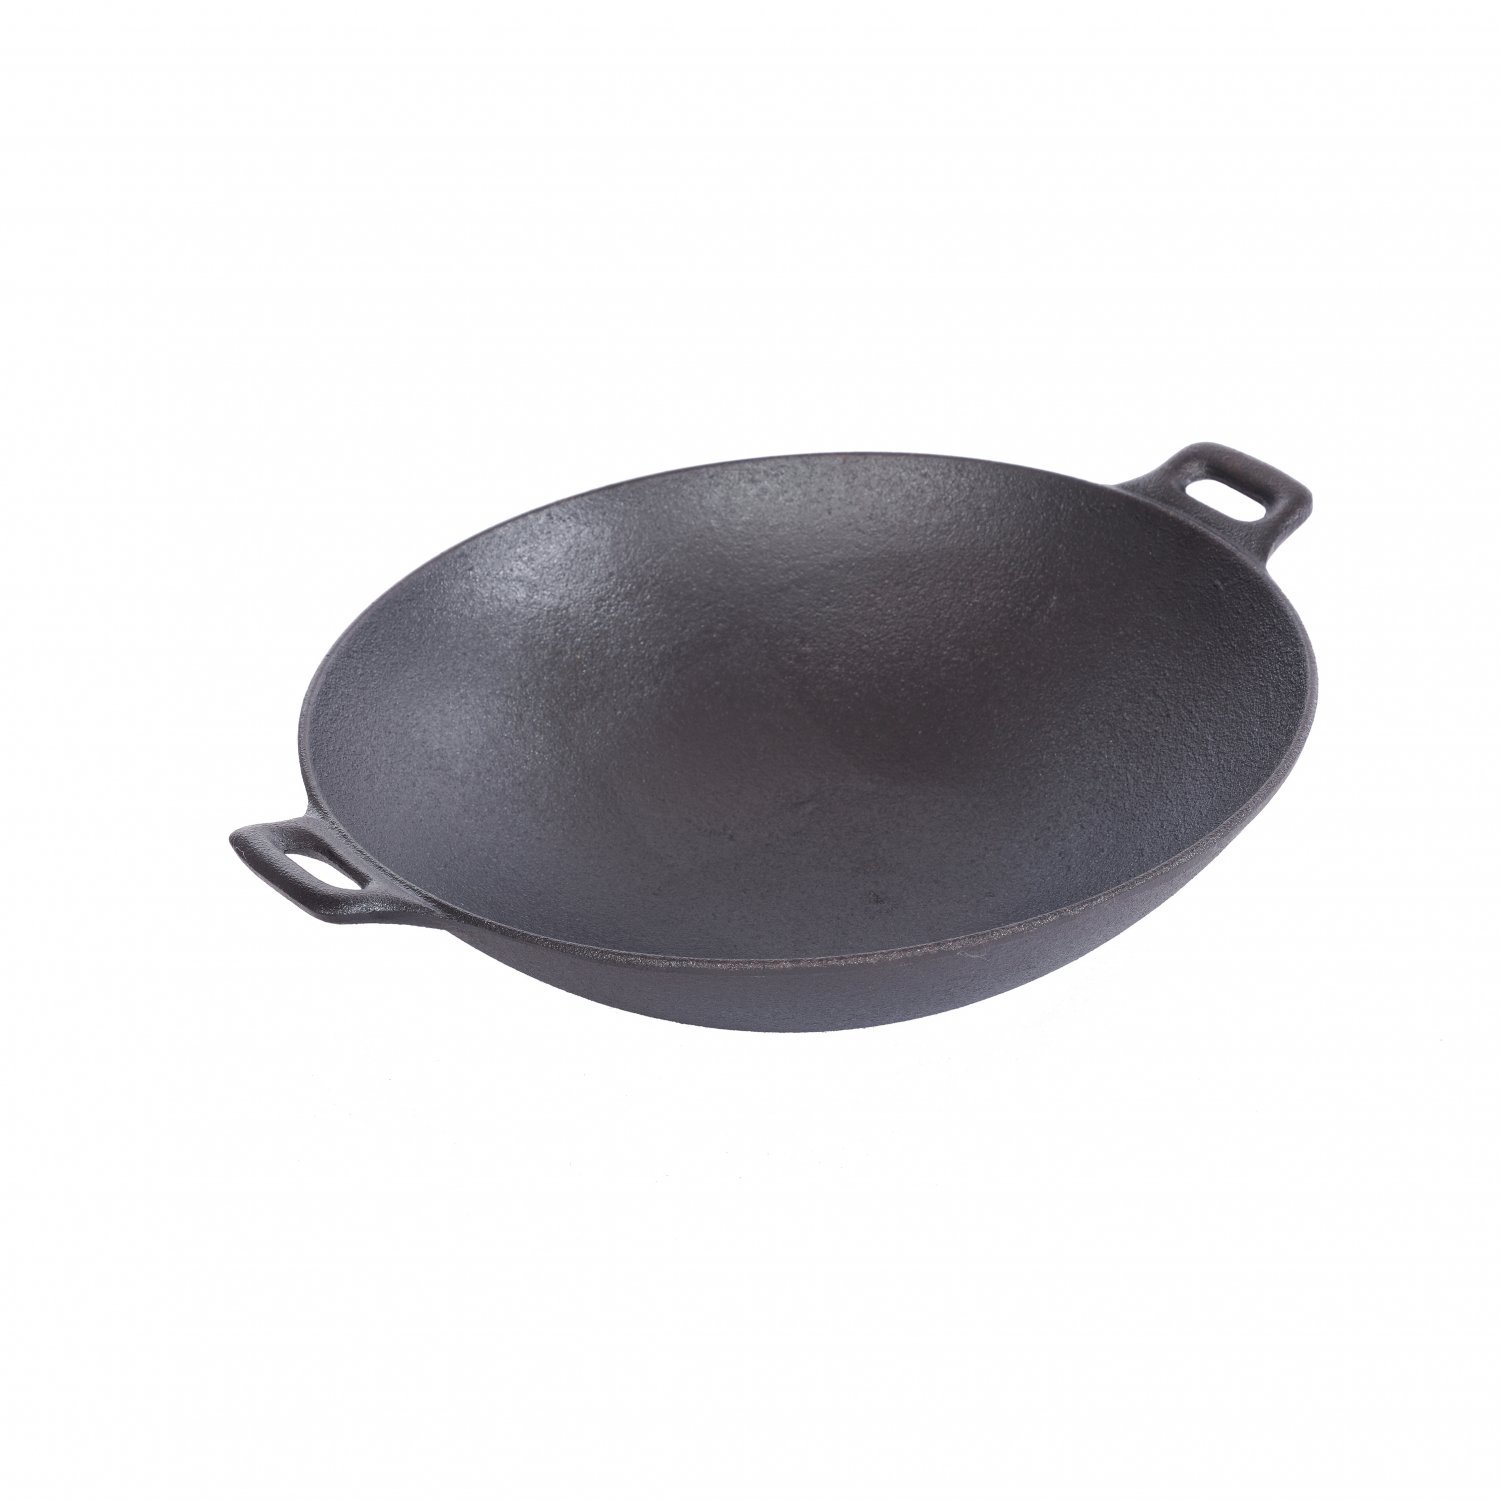 30cm Cast Iron Non Stick Wok Skillet Frying Cooking Pan